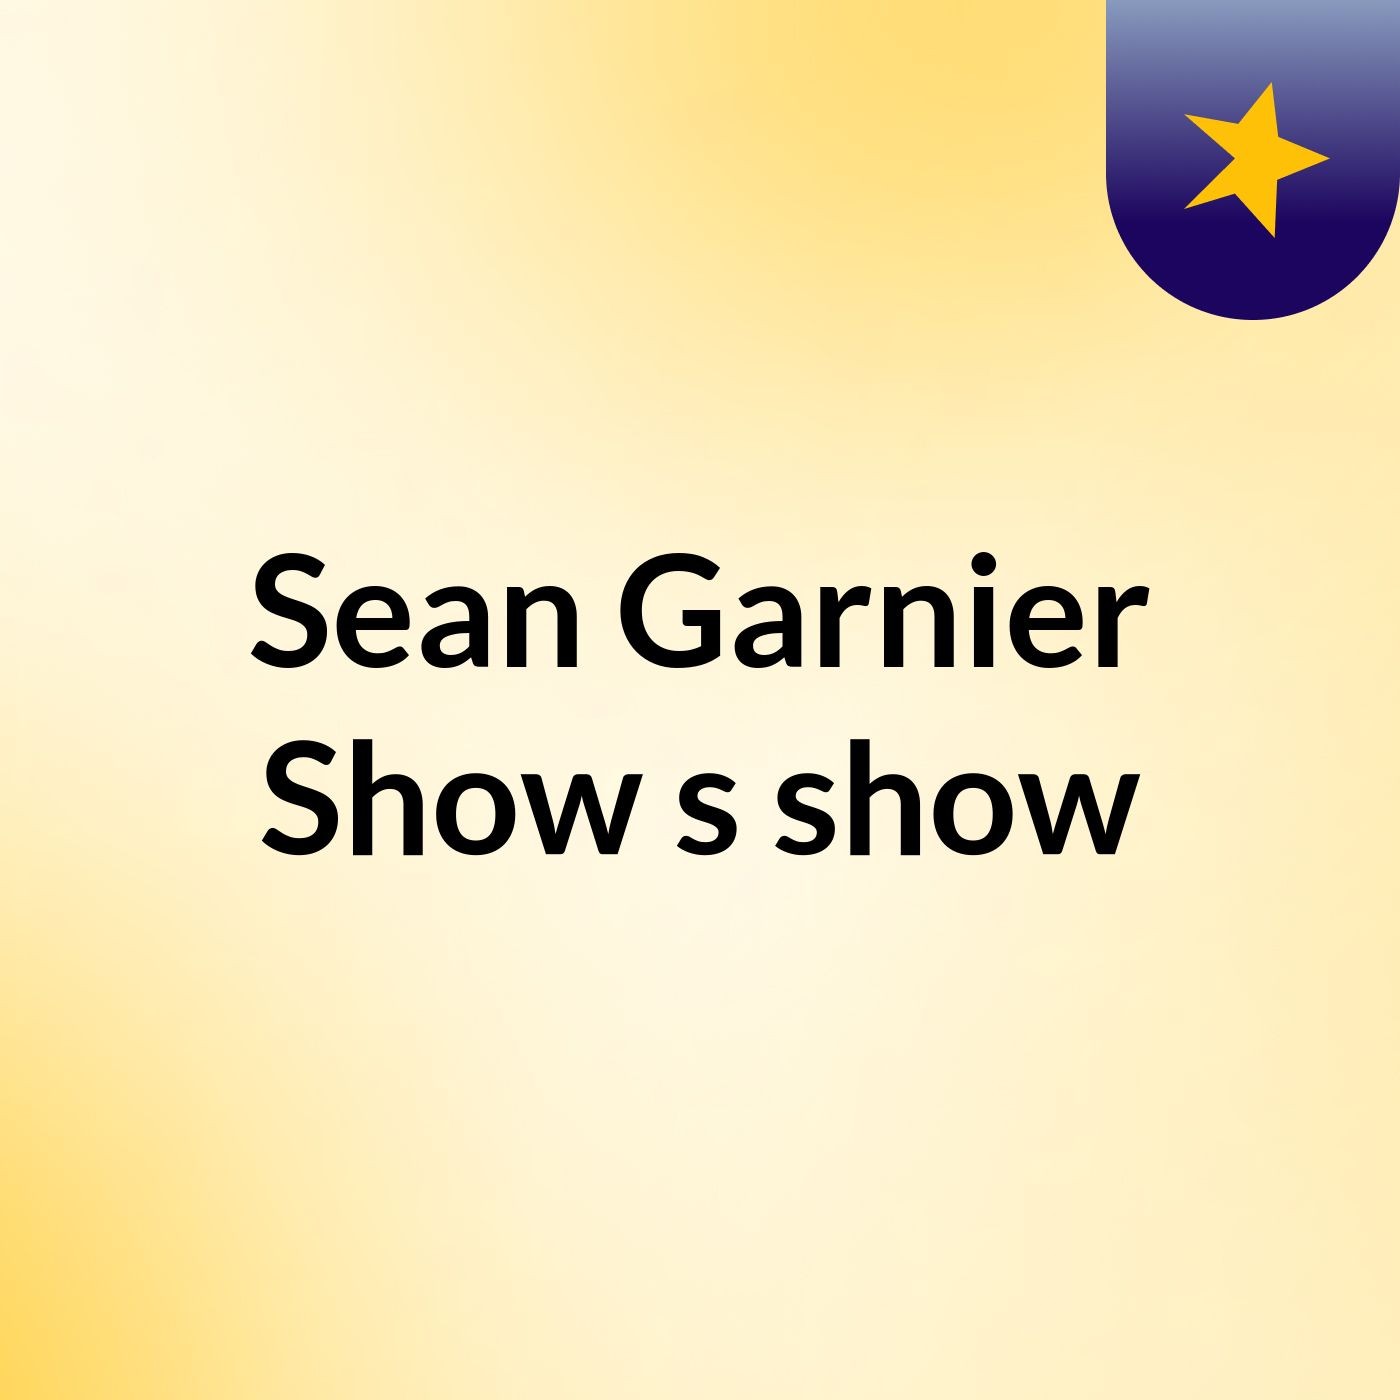 Episódio 27 - Sean Garnier Show's show